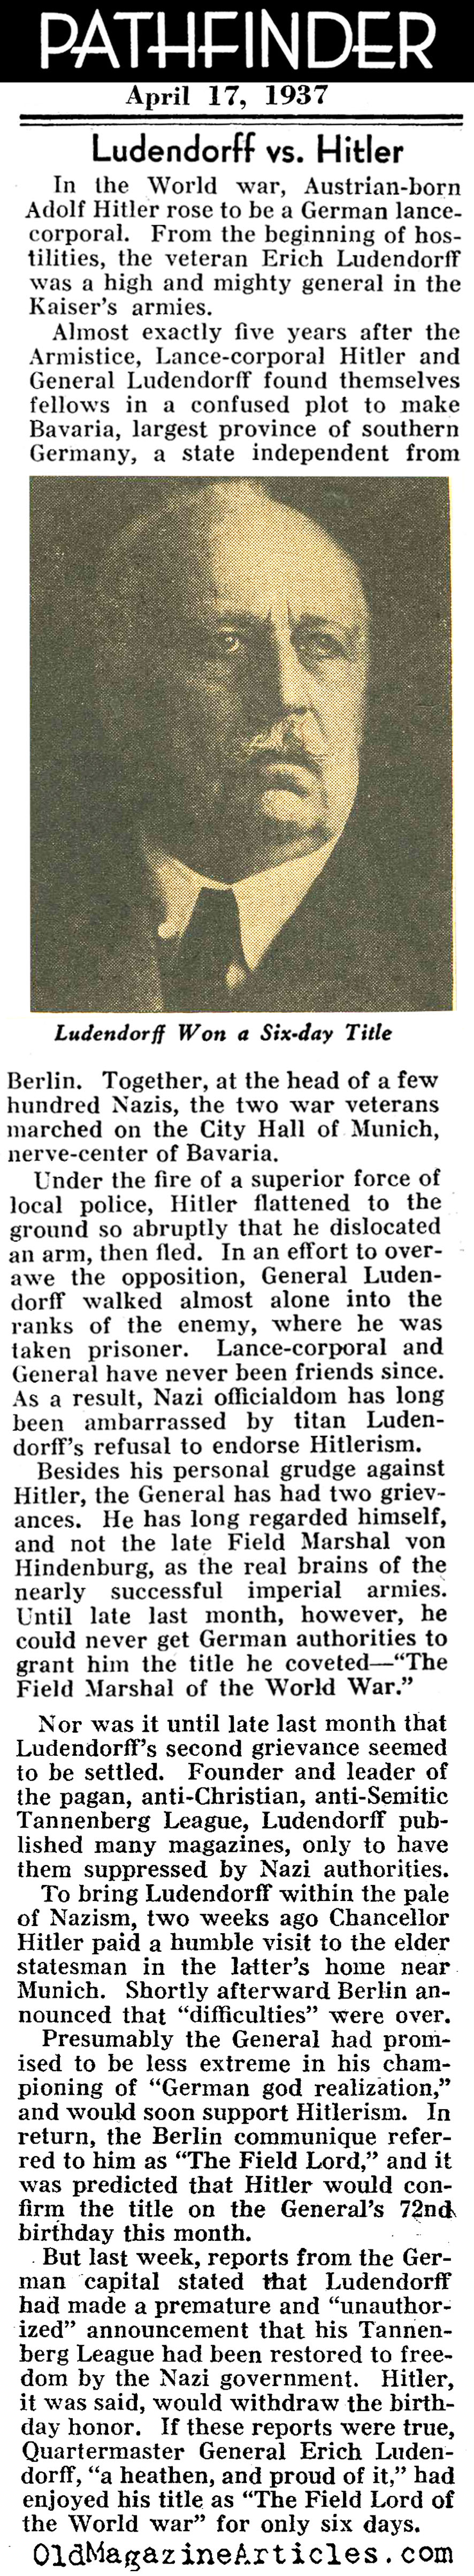 Ludendorff v. Hitler (Pathfinder Magazine, 1937 )